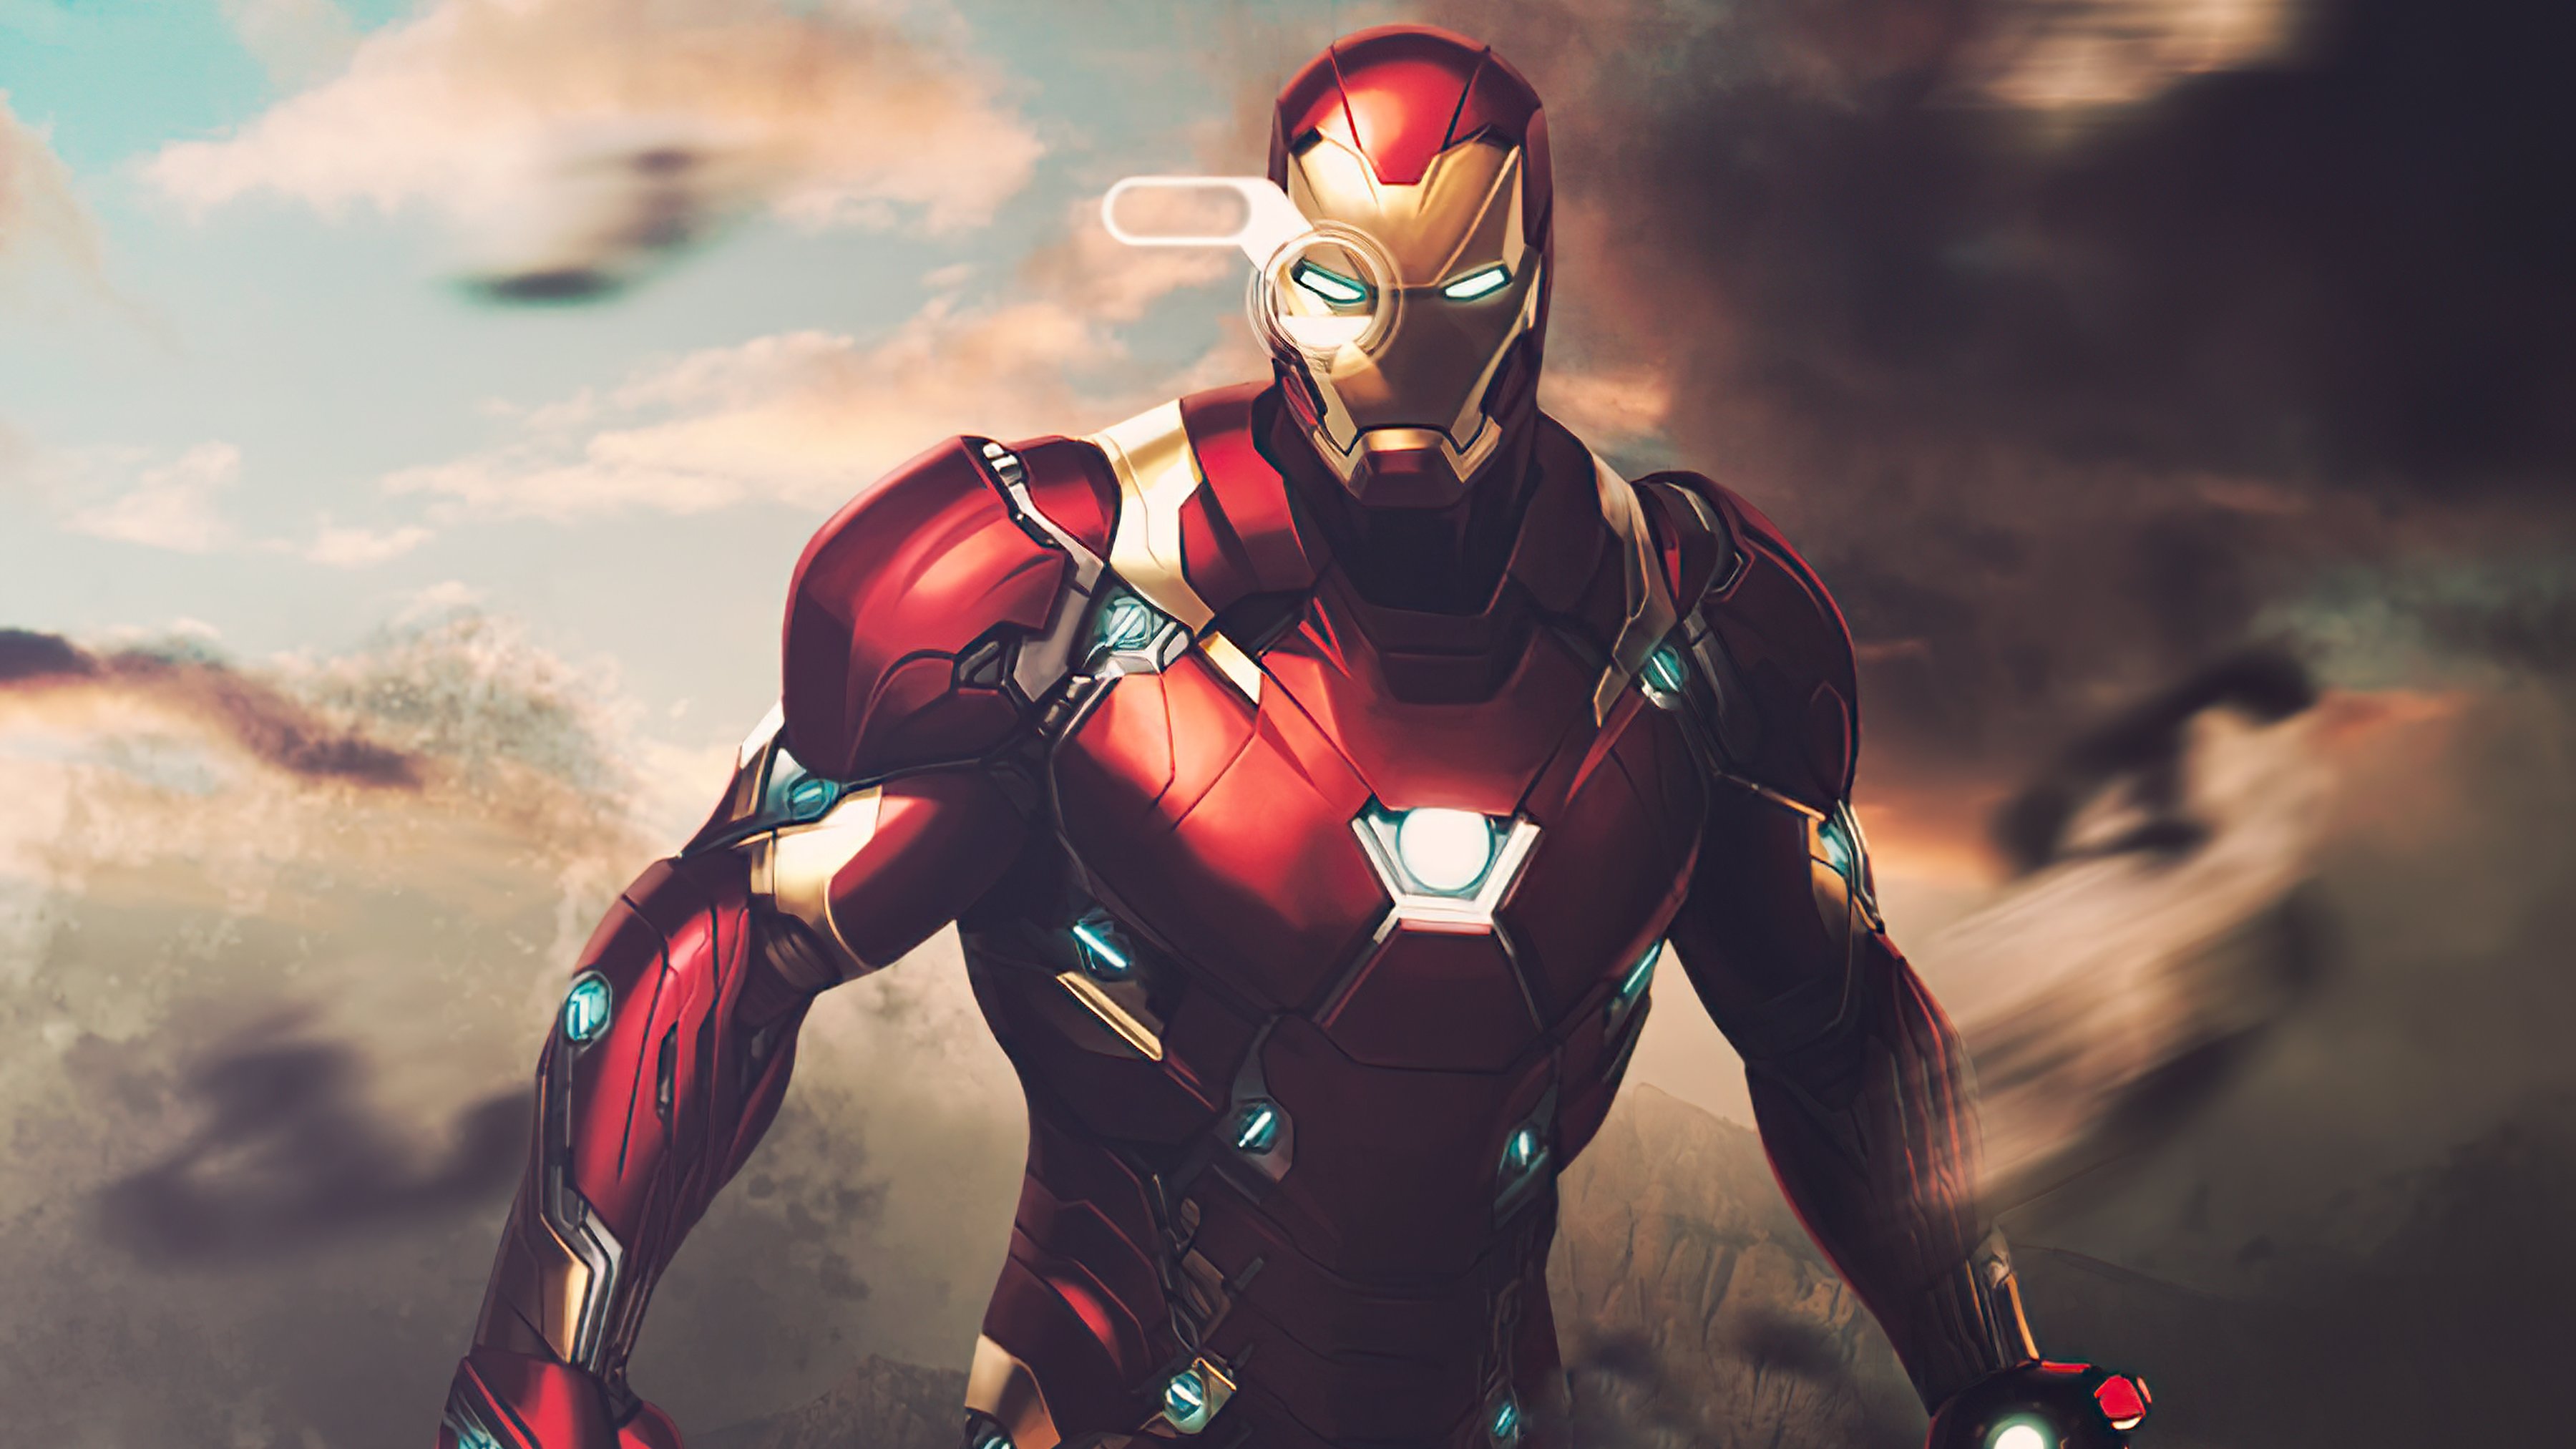 Iron Man Poster 2021 Wallpaper ID:7485.